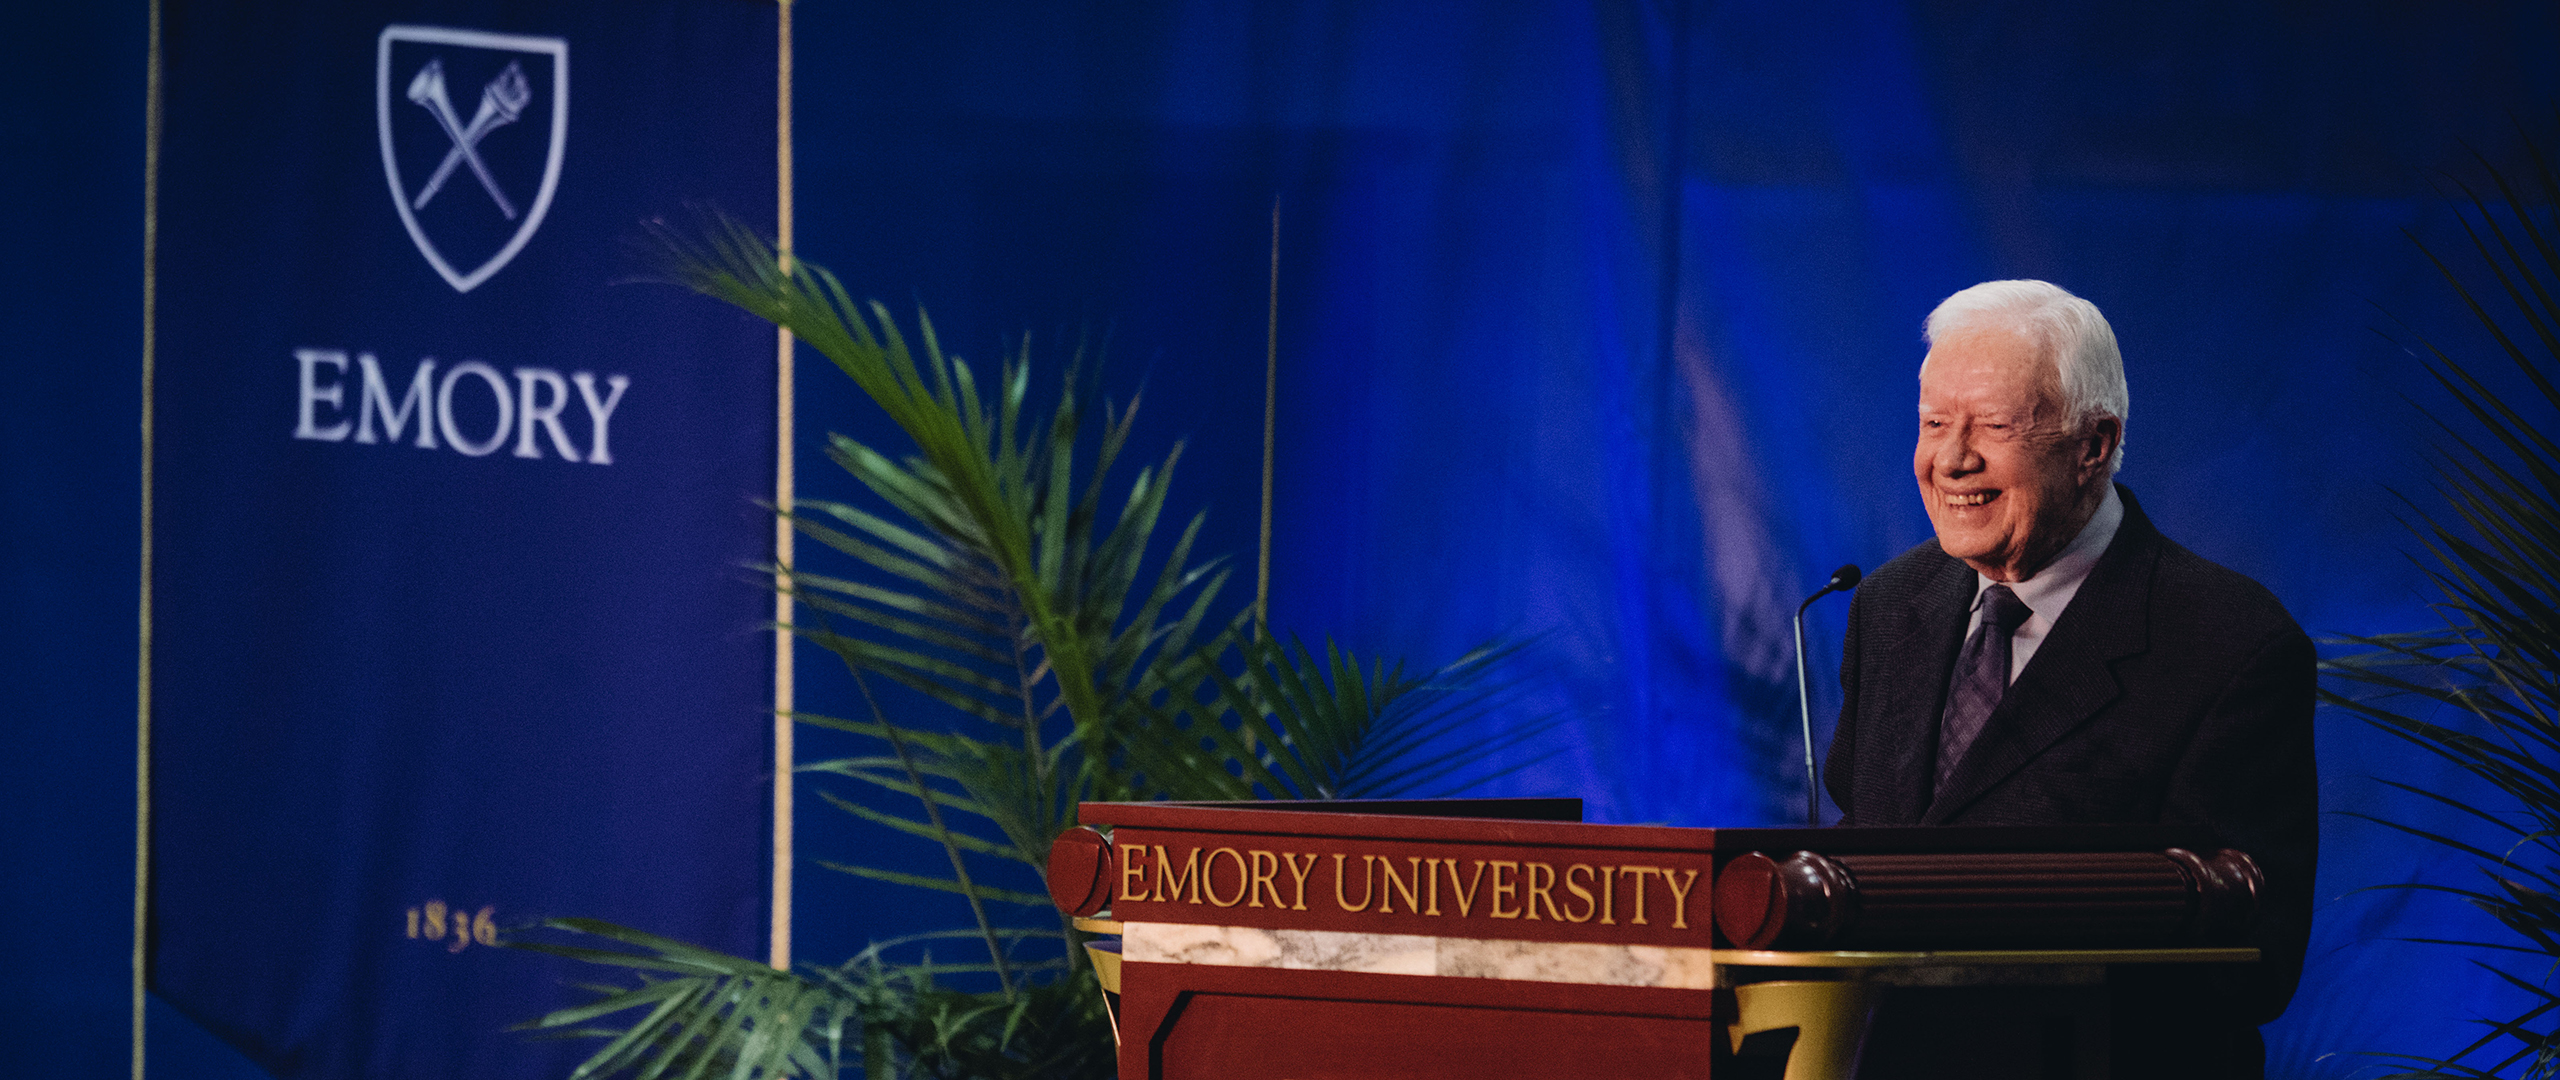 President Carter speaking at Emory